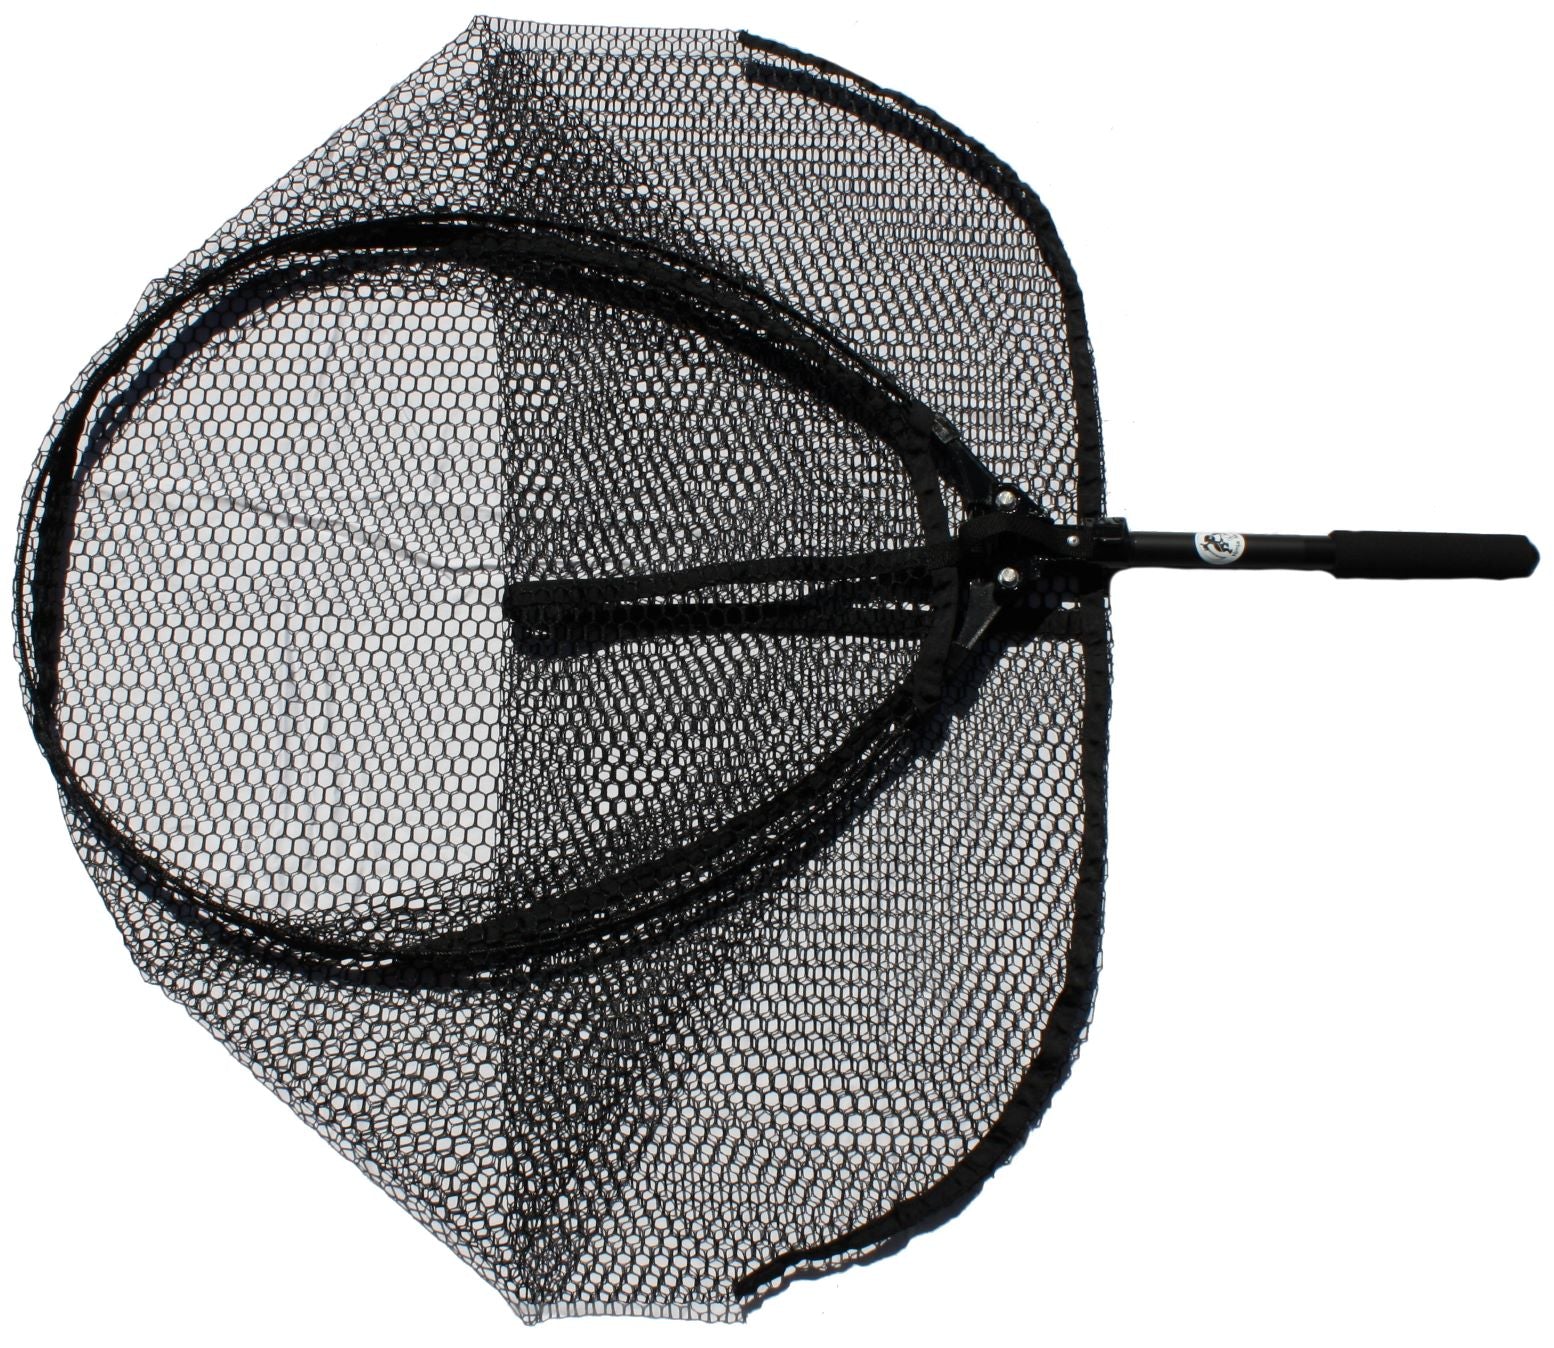 Technet Fishing Net with 30 Sliding Handle & 24 Deep, 21 x 25